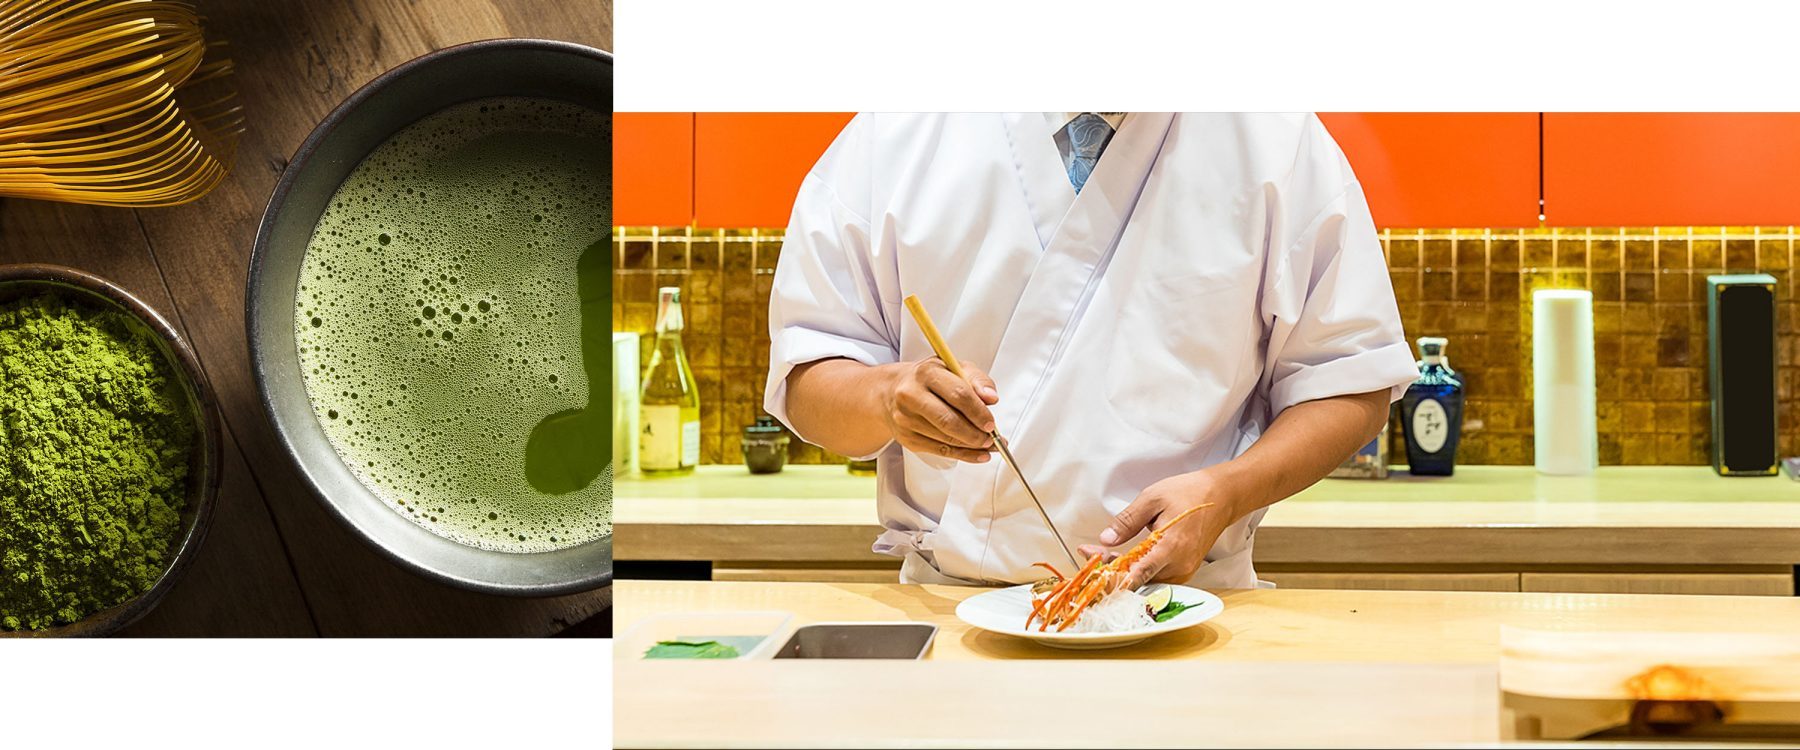 Food at a Ryokan hotel and Sushi chef preparing a meal